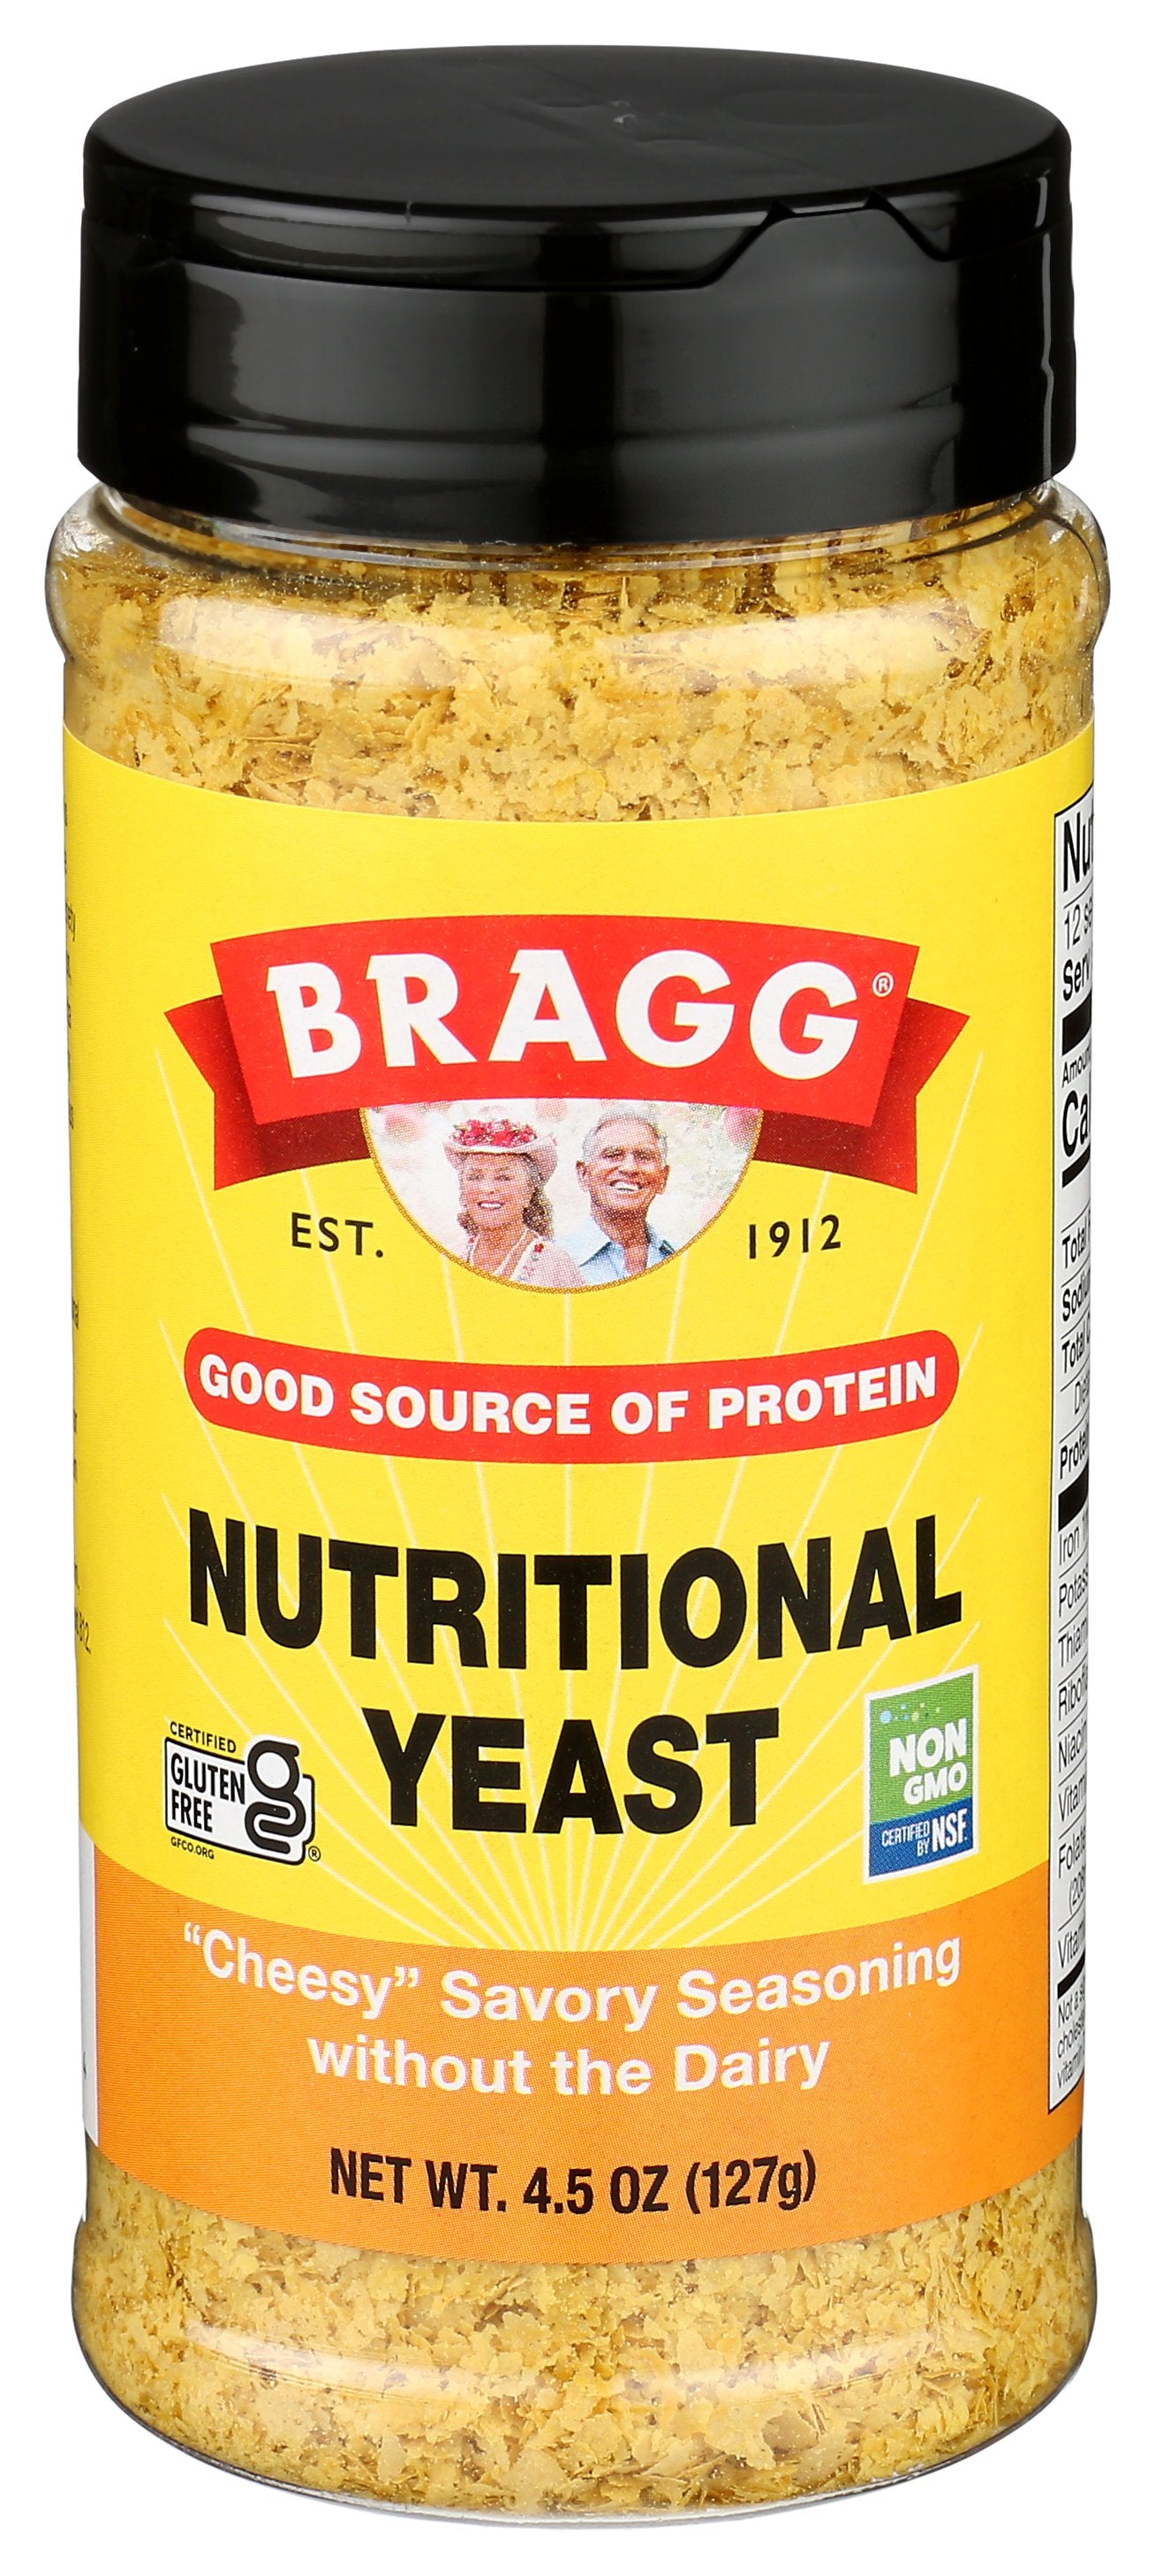 BRAGG YEAST NUTRITIONAL